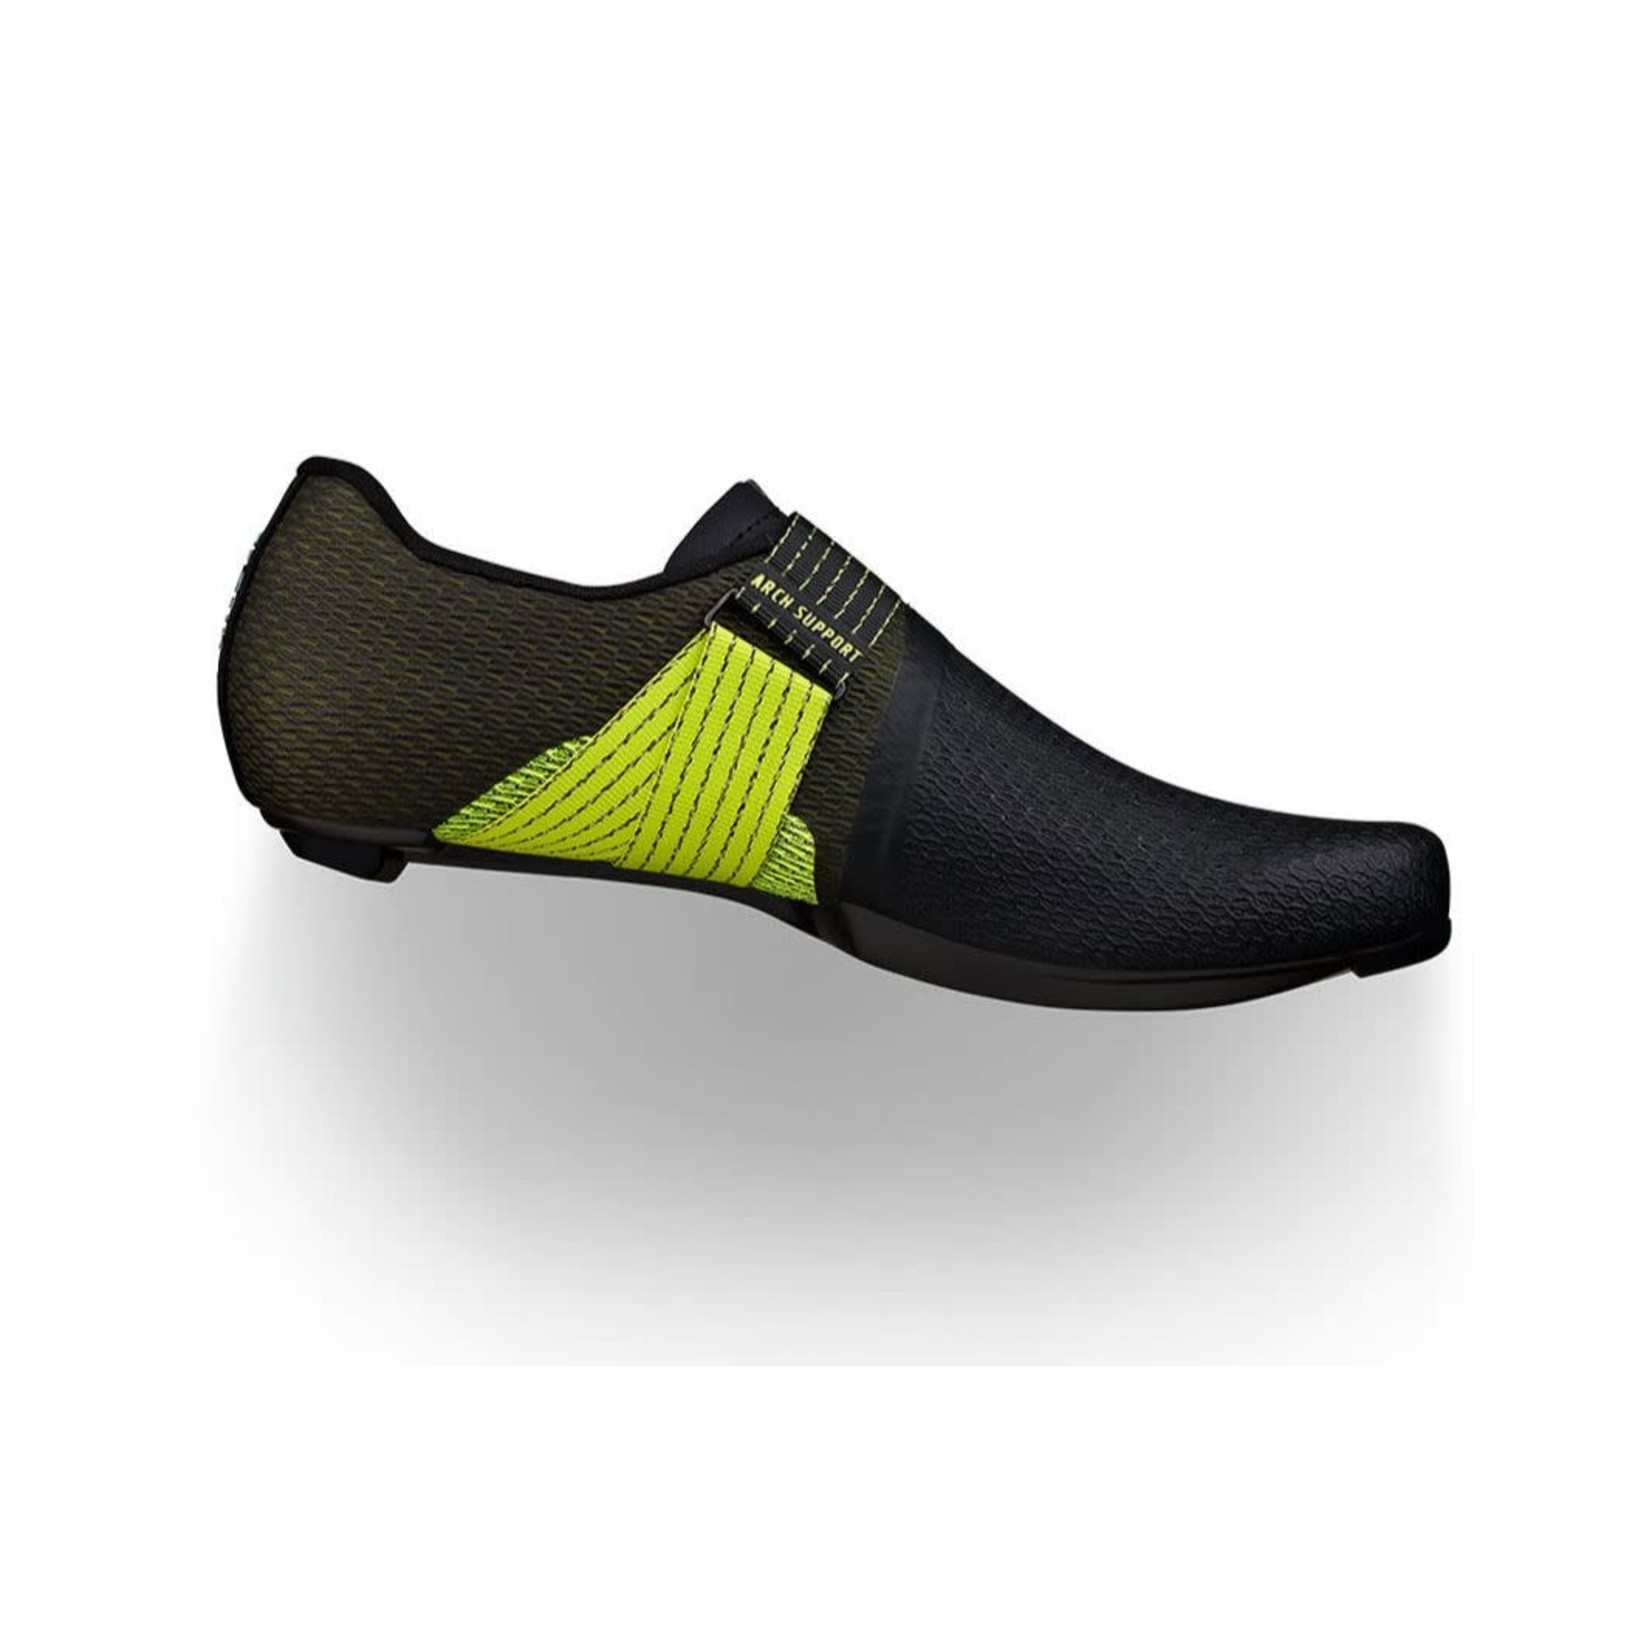 Fizik Fizik Vento Stabilita Carbon PU Laminated Mesh Upper Shoes - Black/Yellow